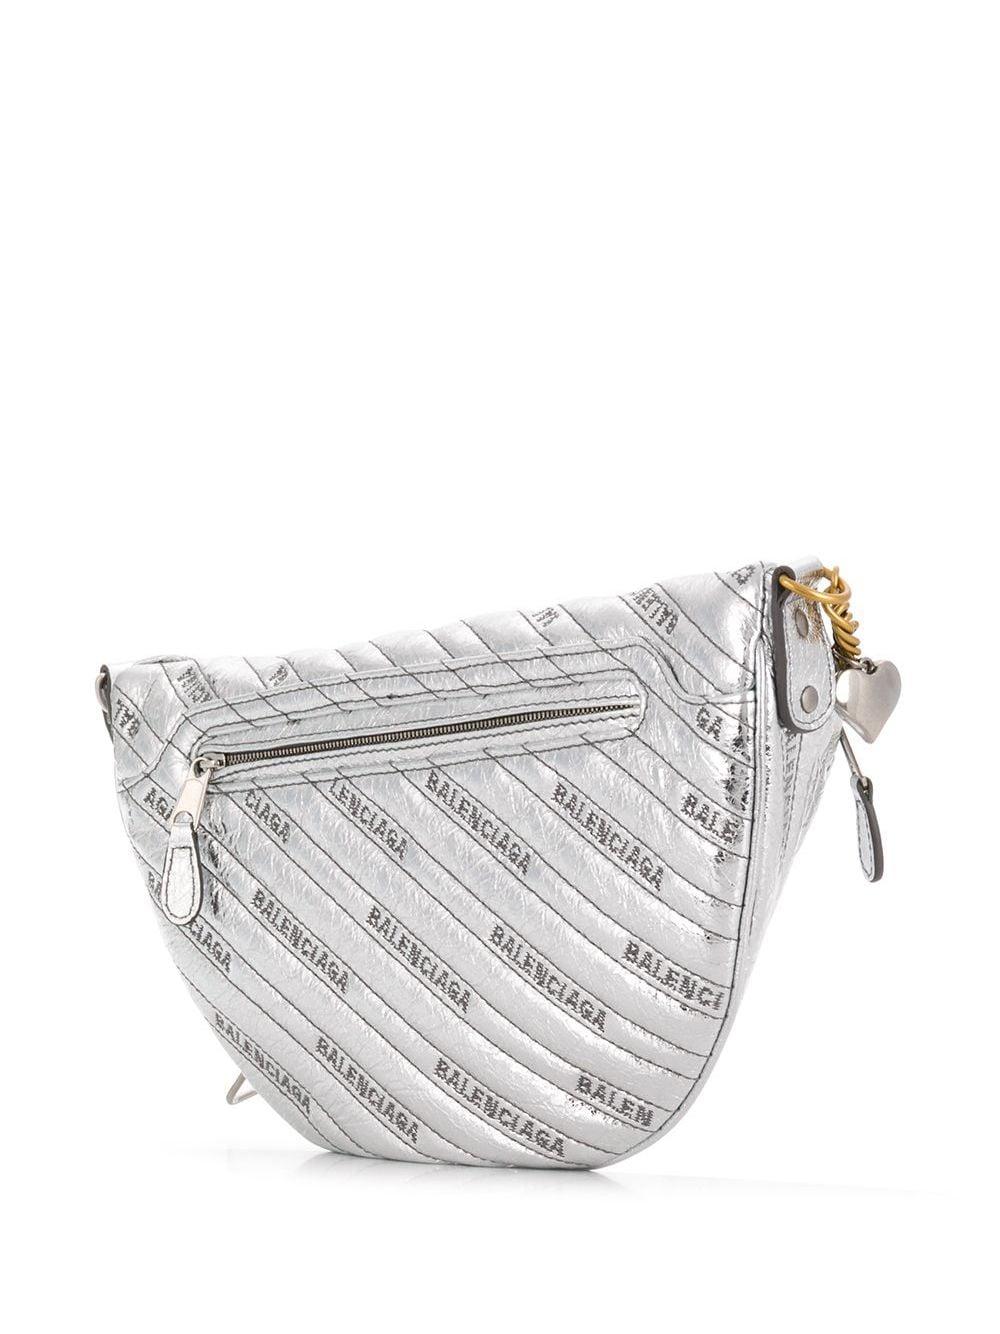 Balenciaga Leather Souvenir Belt Bag in Silver (Metallic) | Lyst